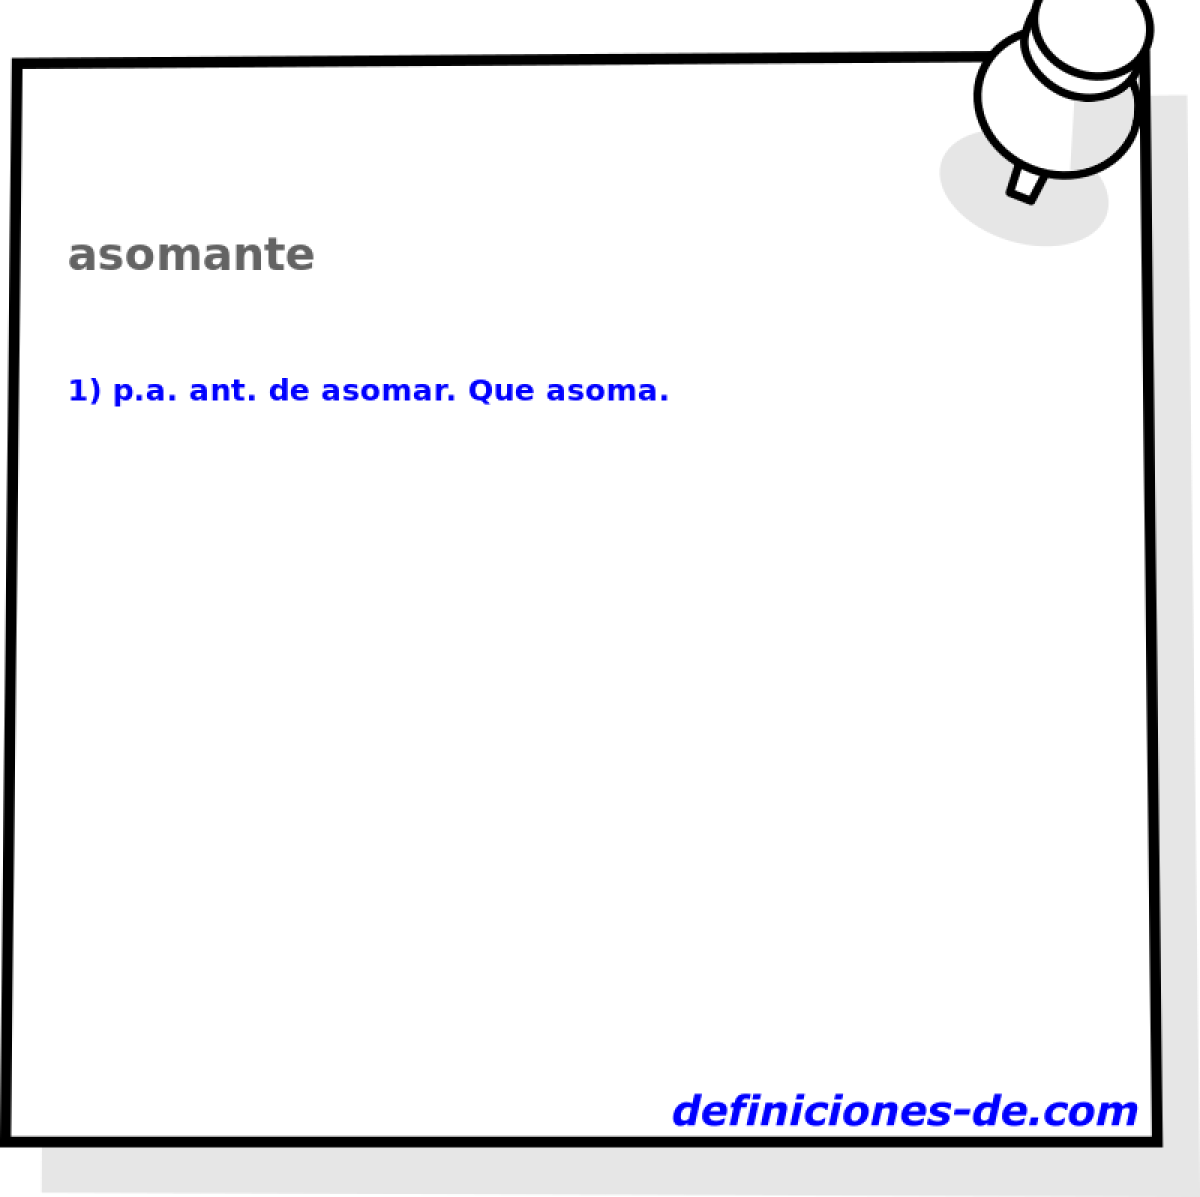 asomante 